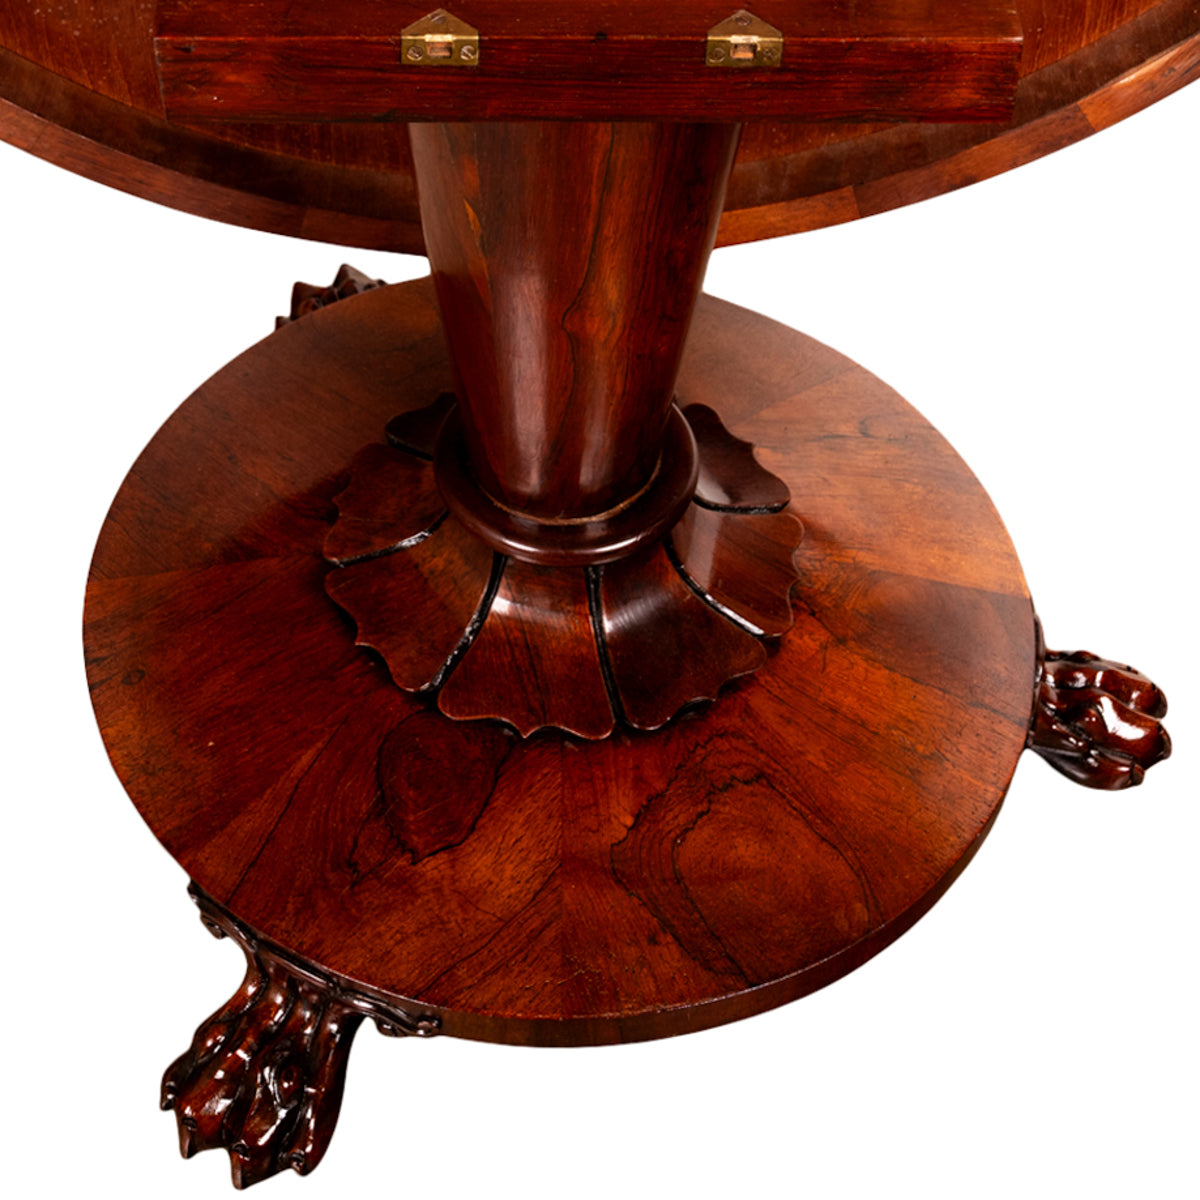 Antique Georgian Regency Rosewood Circular Dining Breakfast Tilt-Top Table 1820